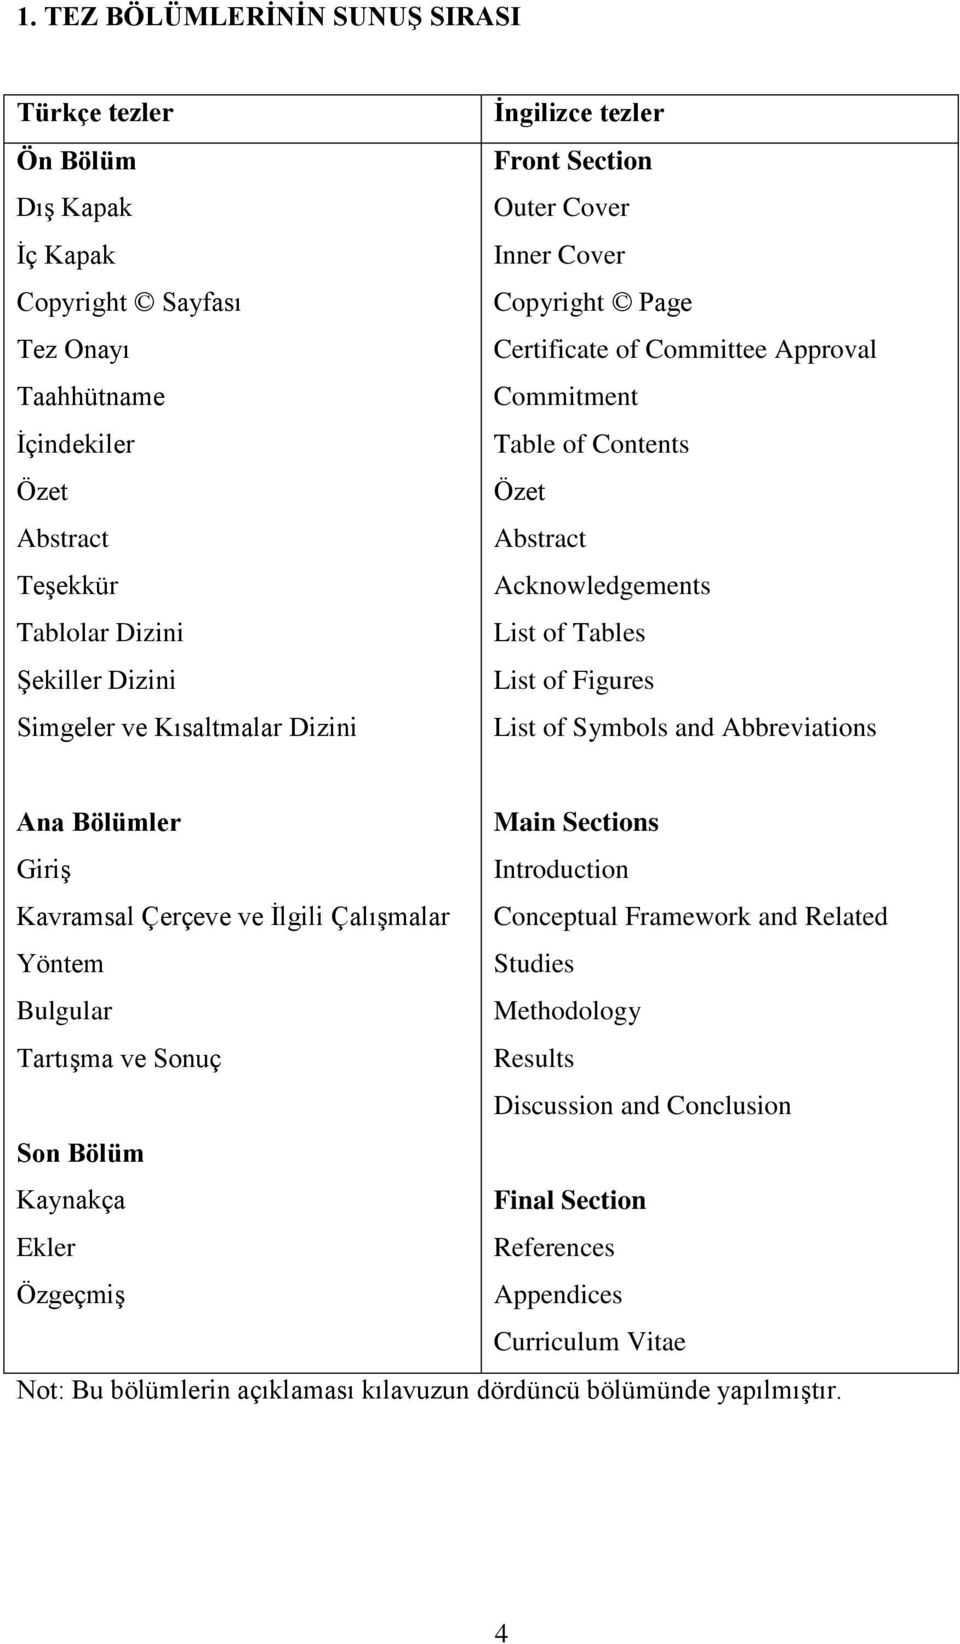 List of Figures List of Symbols and Abbreviations Ana Bölümler Main Sections Giriş Introduction Kavramsal Çerçeve ve İlgili Çalışmalar Conceptual Framework and Related Yöntem Studies Bulgular